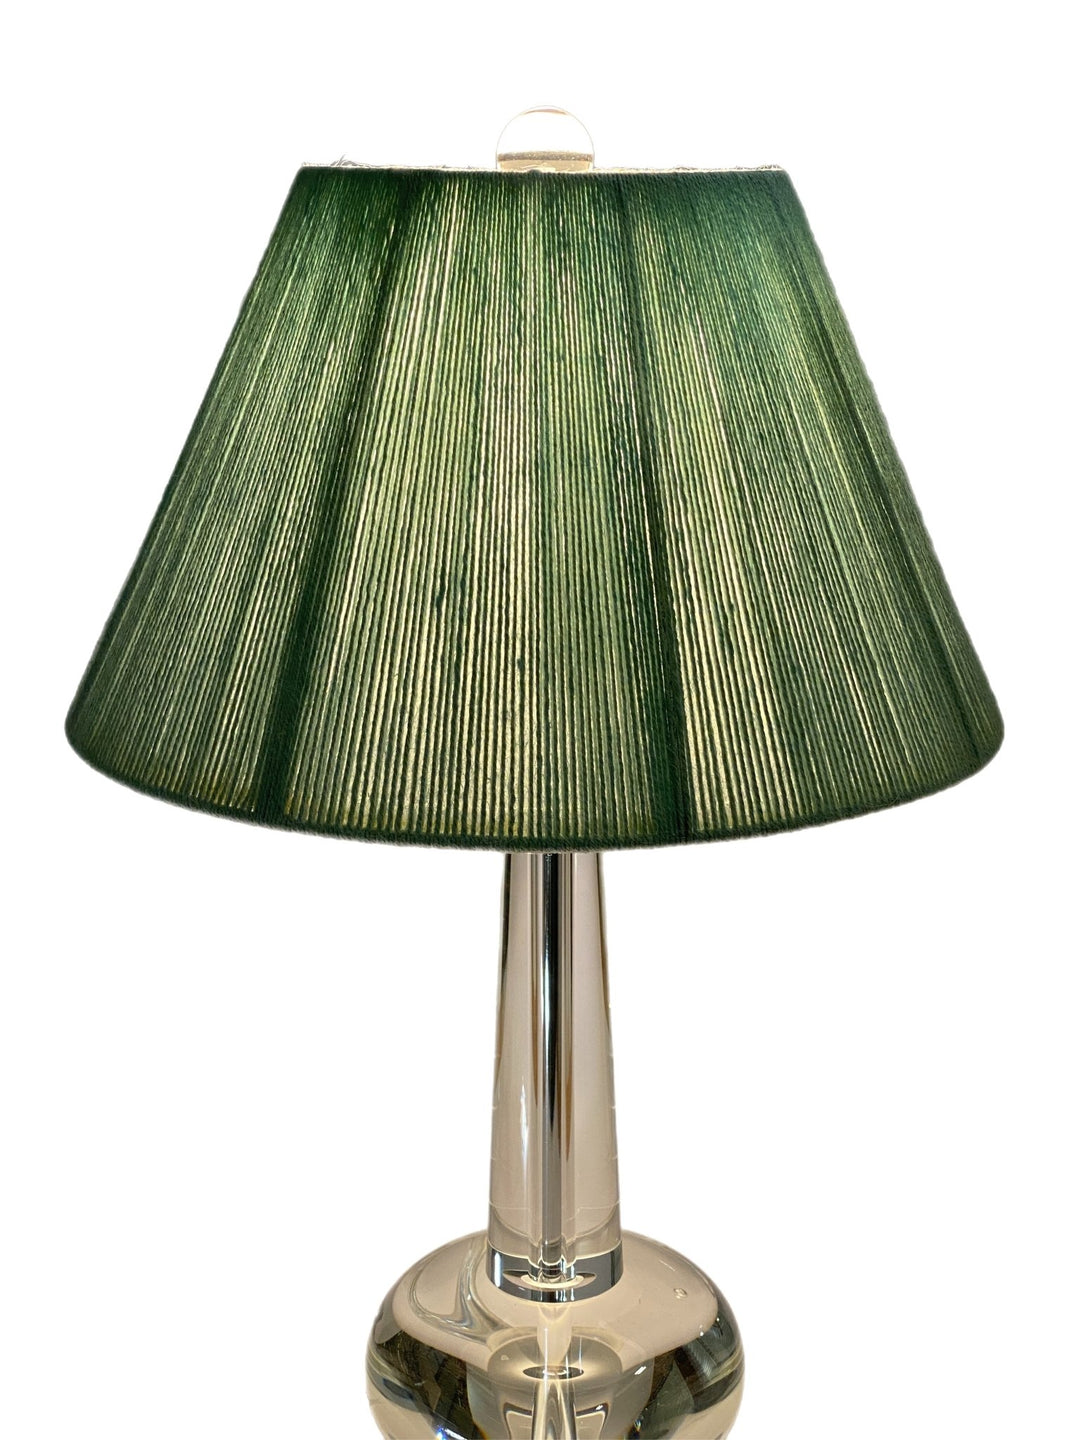 16" Aviary Blue Jute String Empire Lamp shade - Lux Lamp Shades